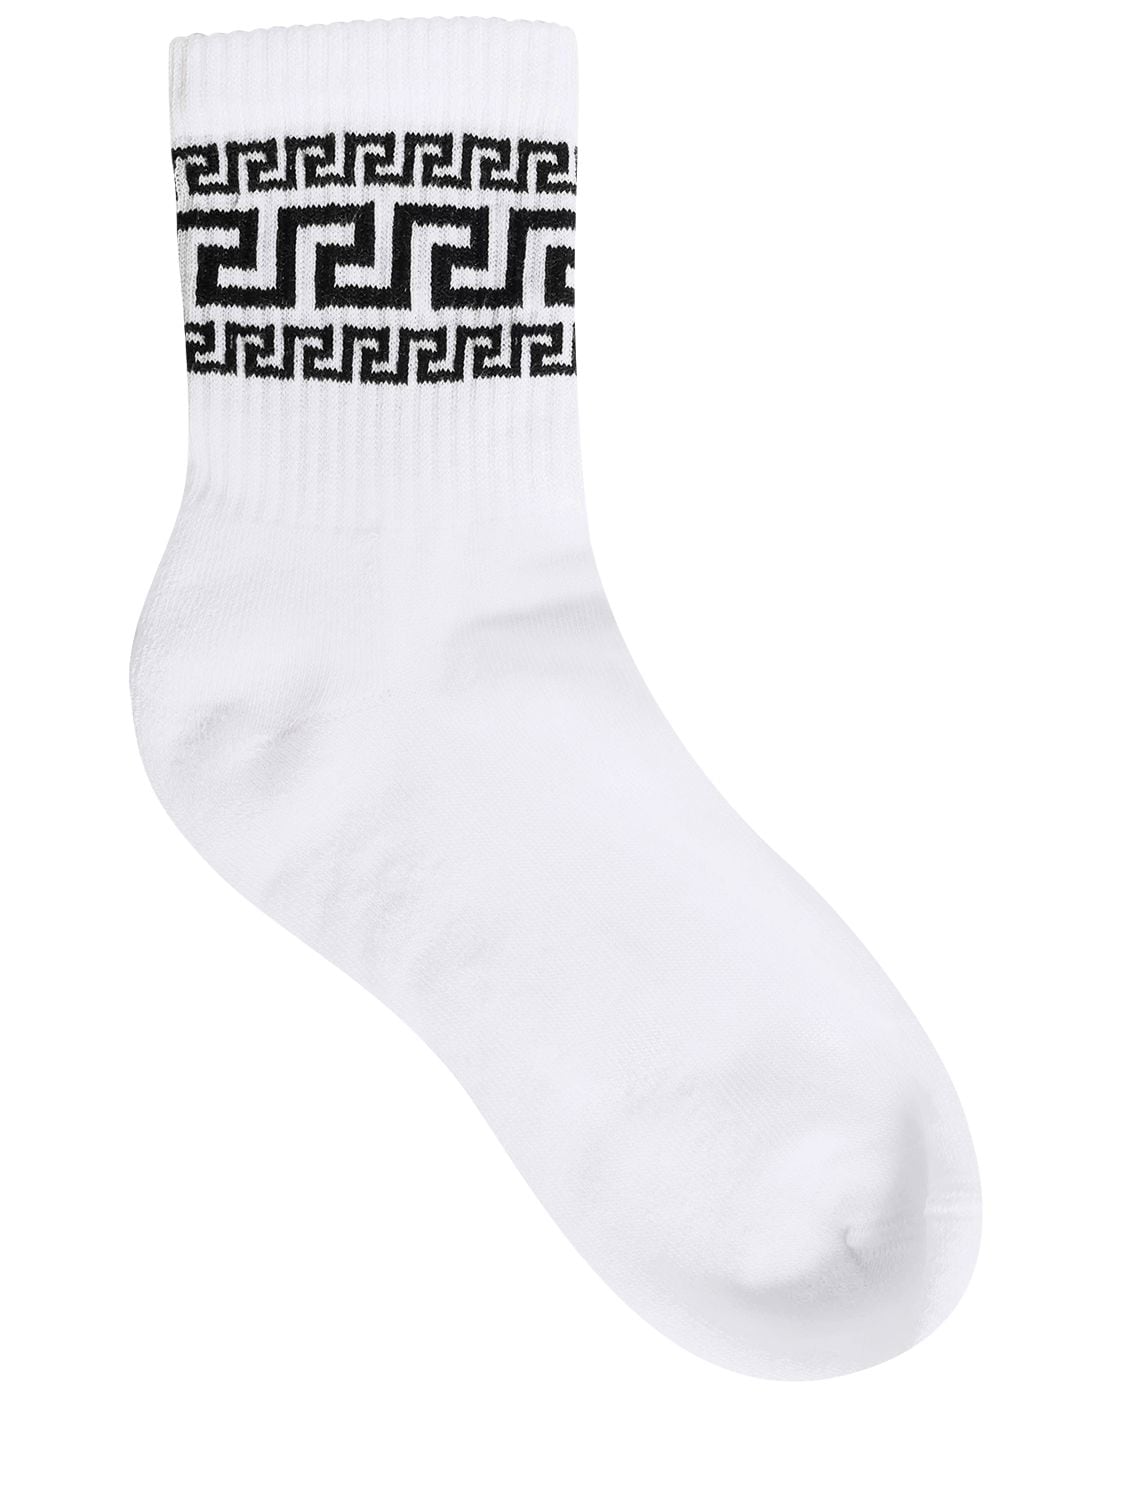 Greca Intarsia Cotton Blend Socks